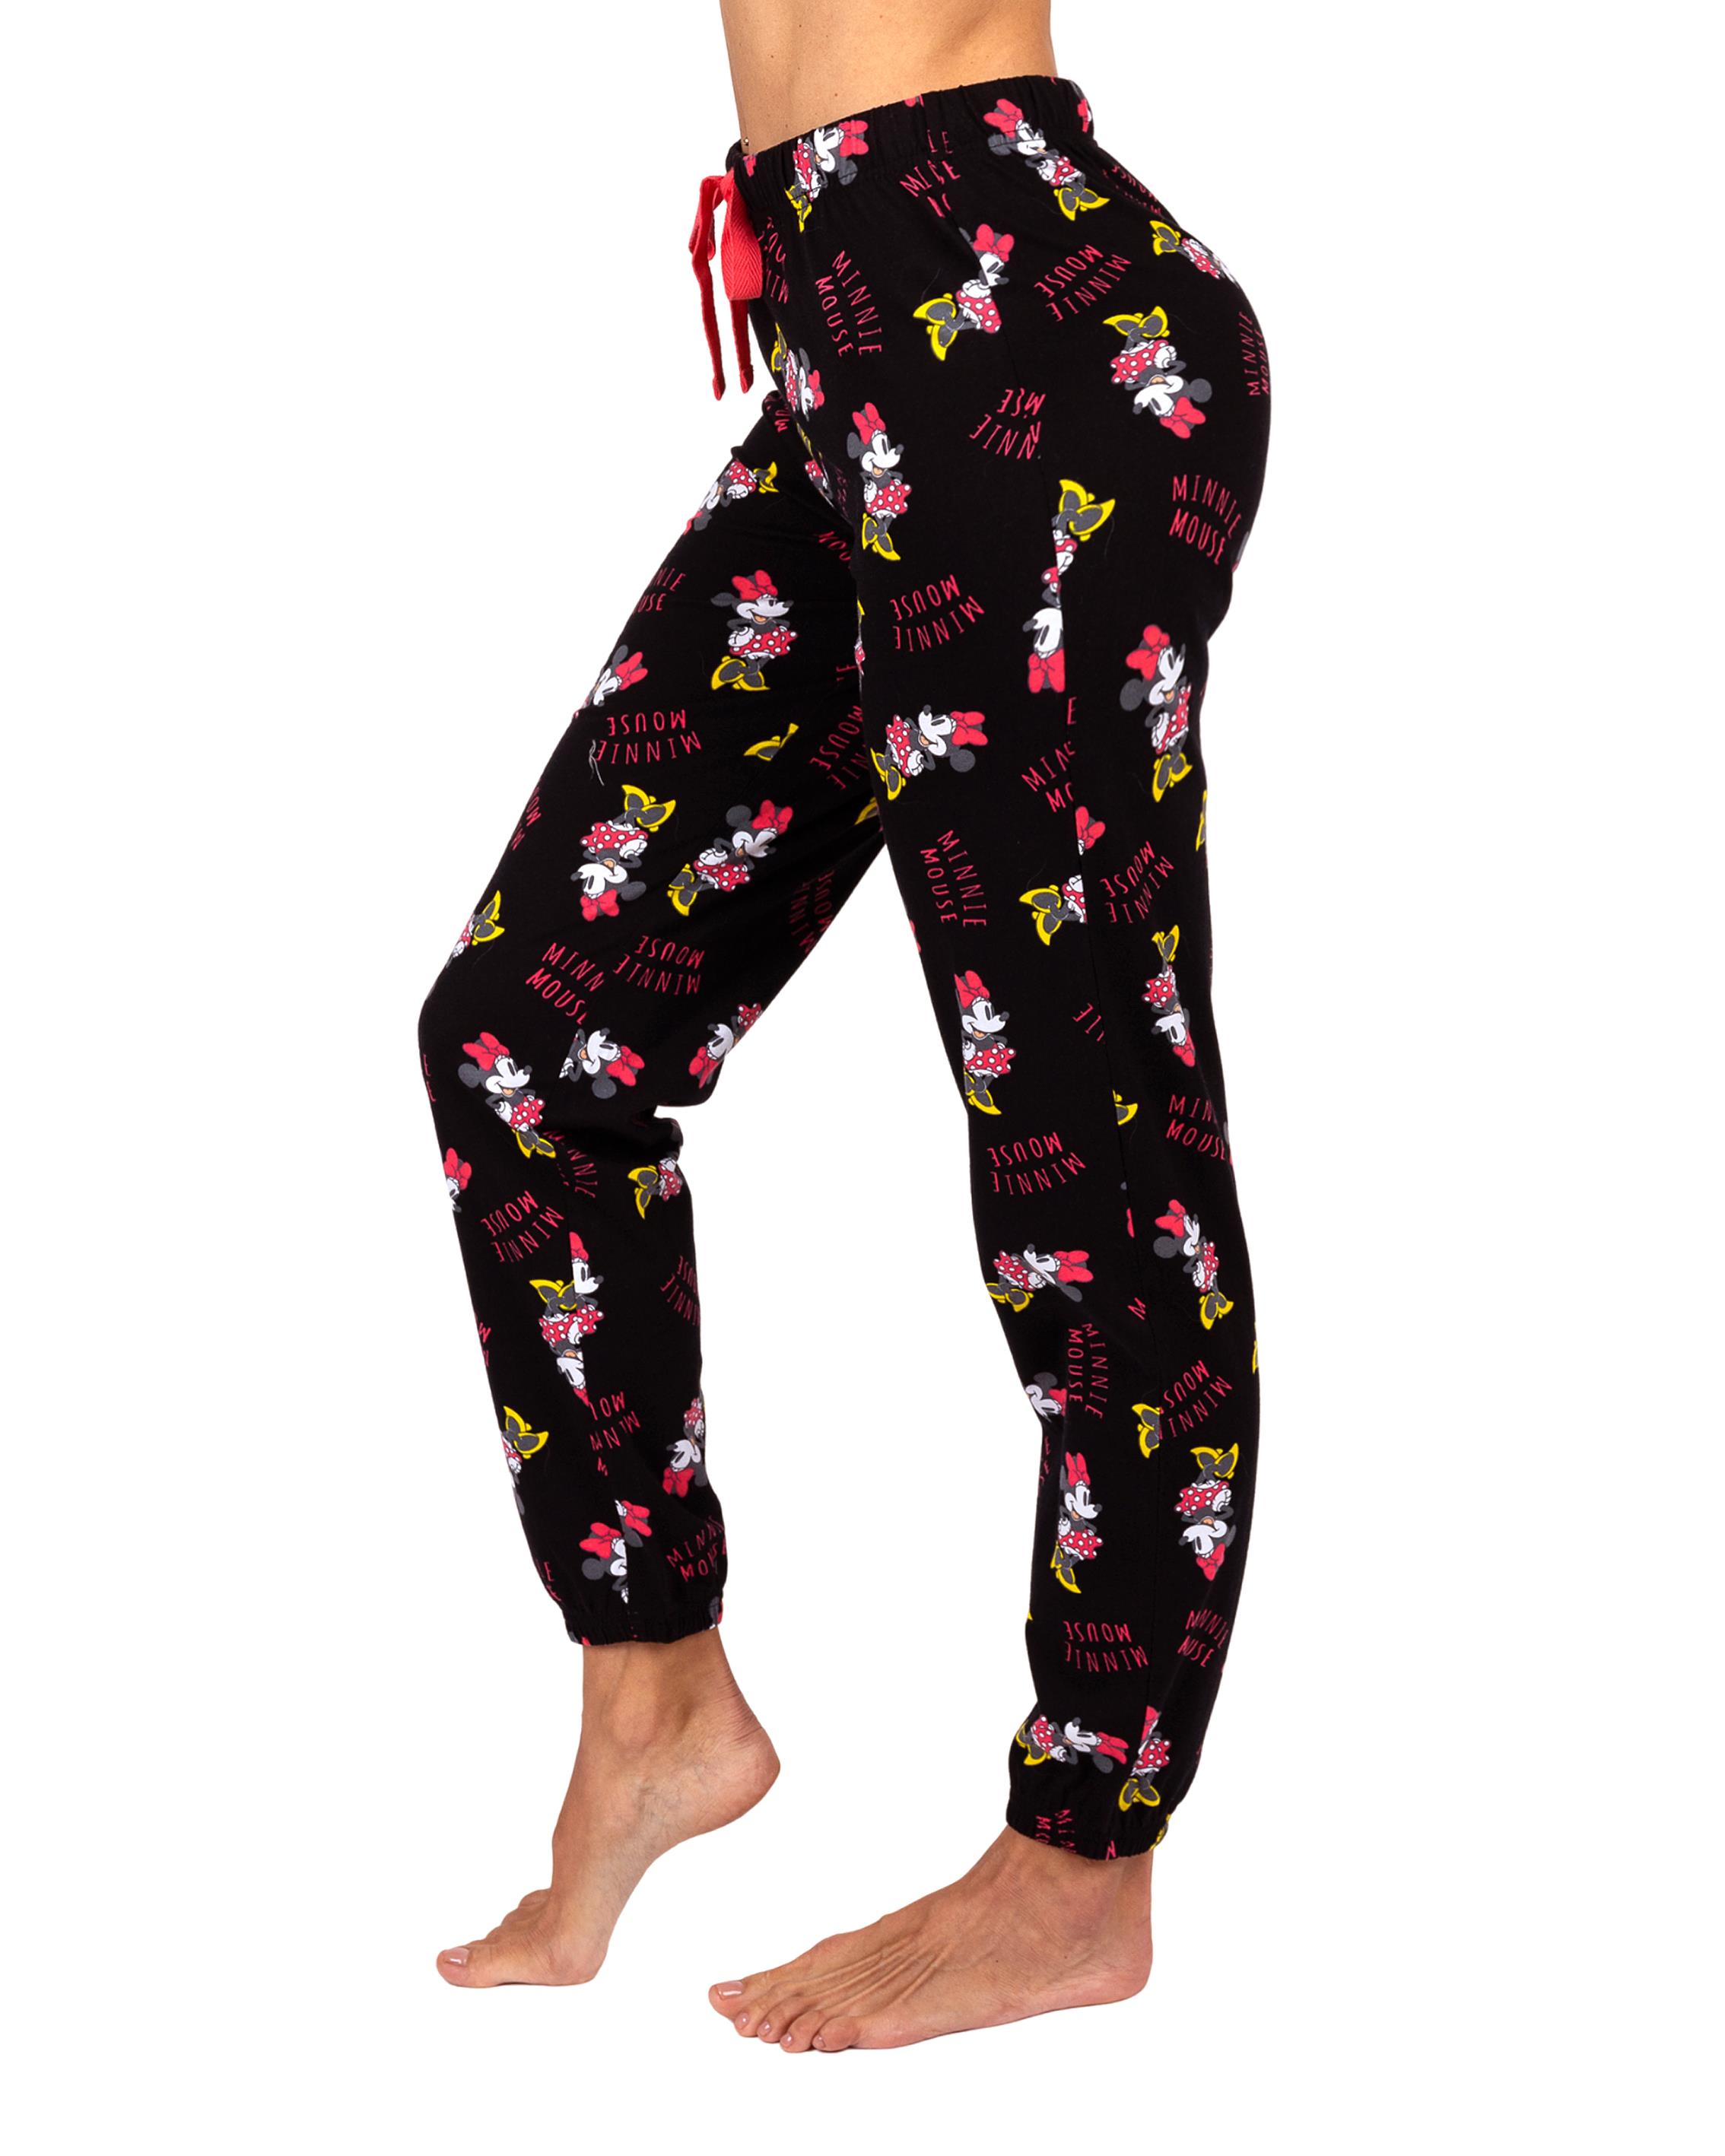 Disney Minnie Mouse Womens Cotton Pajama Pants, Sleepwear Bottoms, Classic Minnie, Size: 2X - image 2 of 4